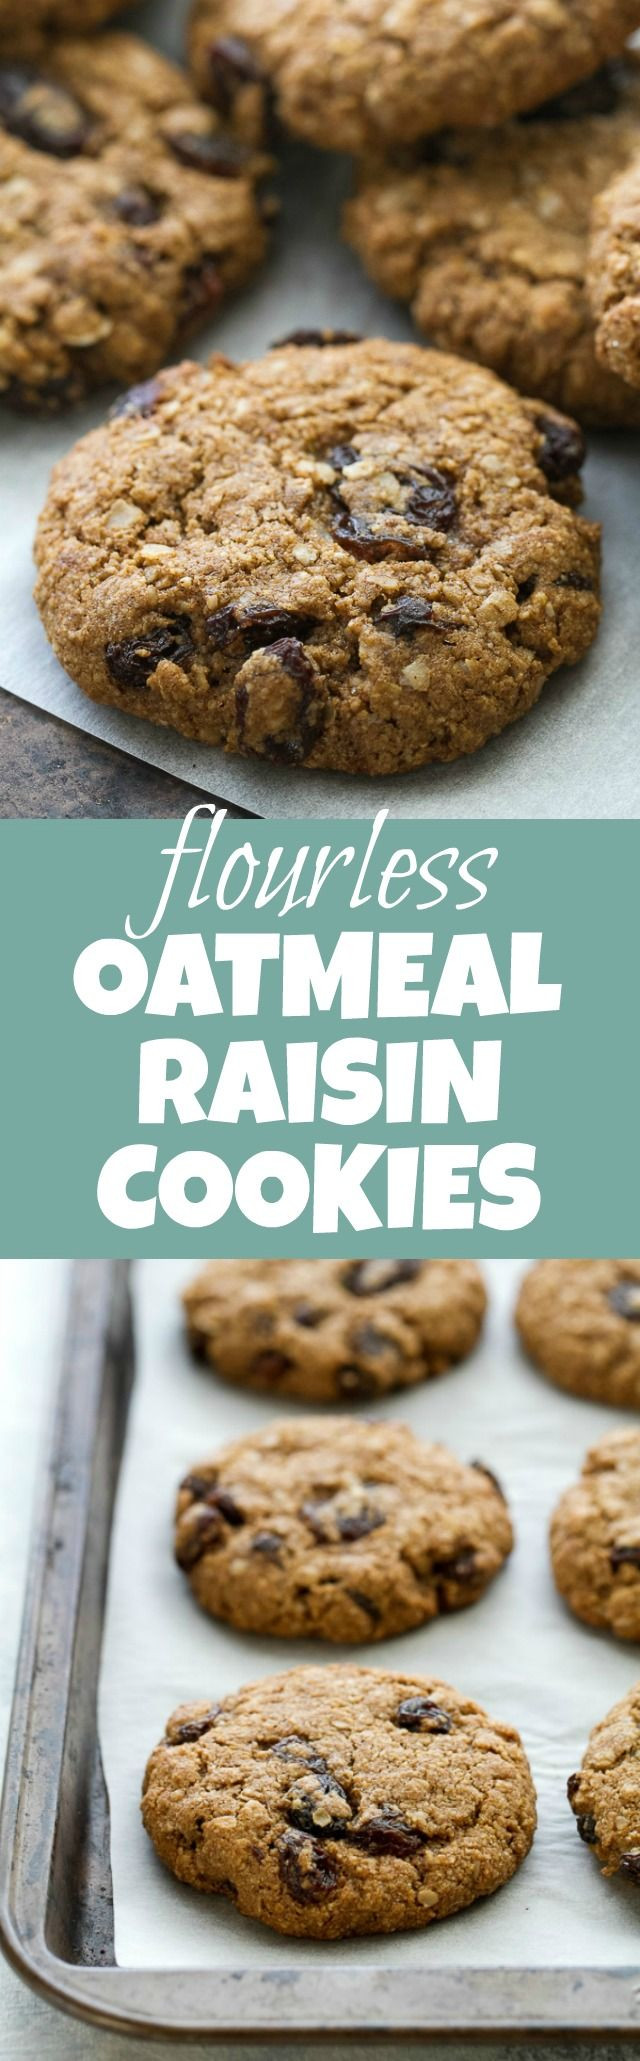 Healthy Oatmeal Cookies Recipe
 heart healthy oatmeal raisin cookies